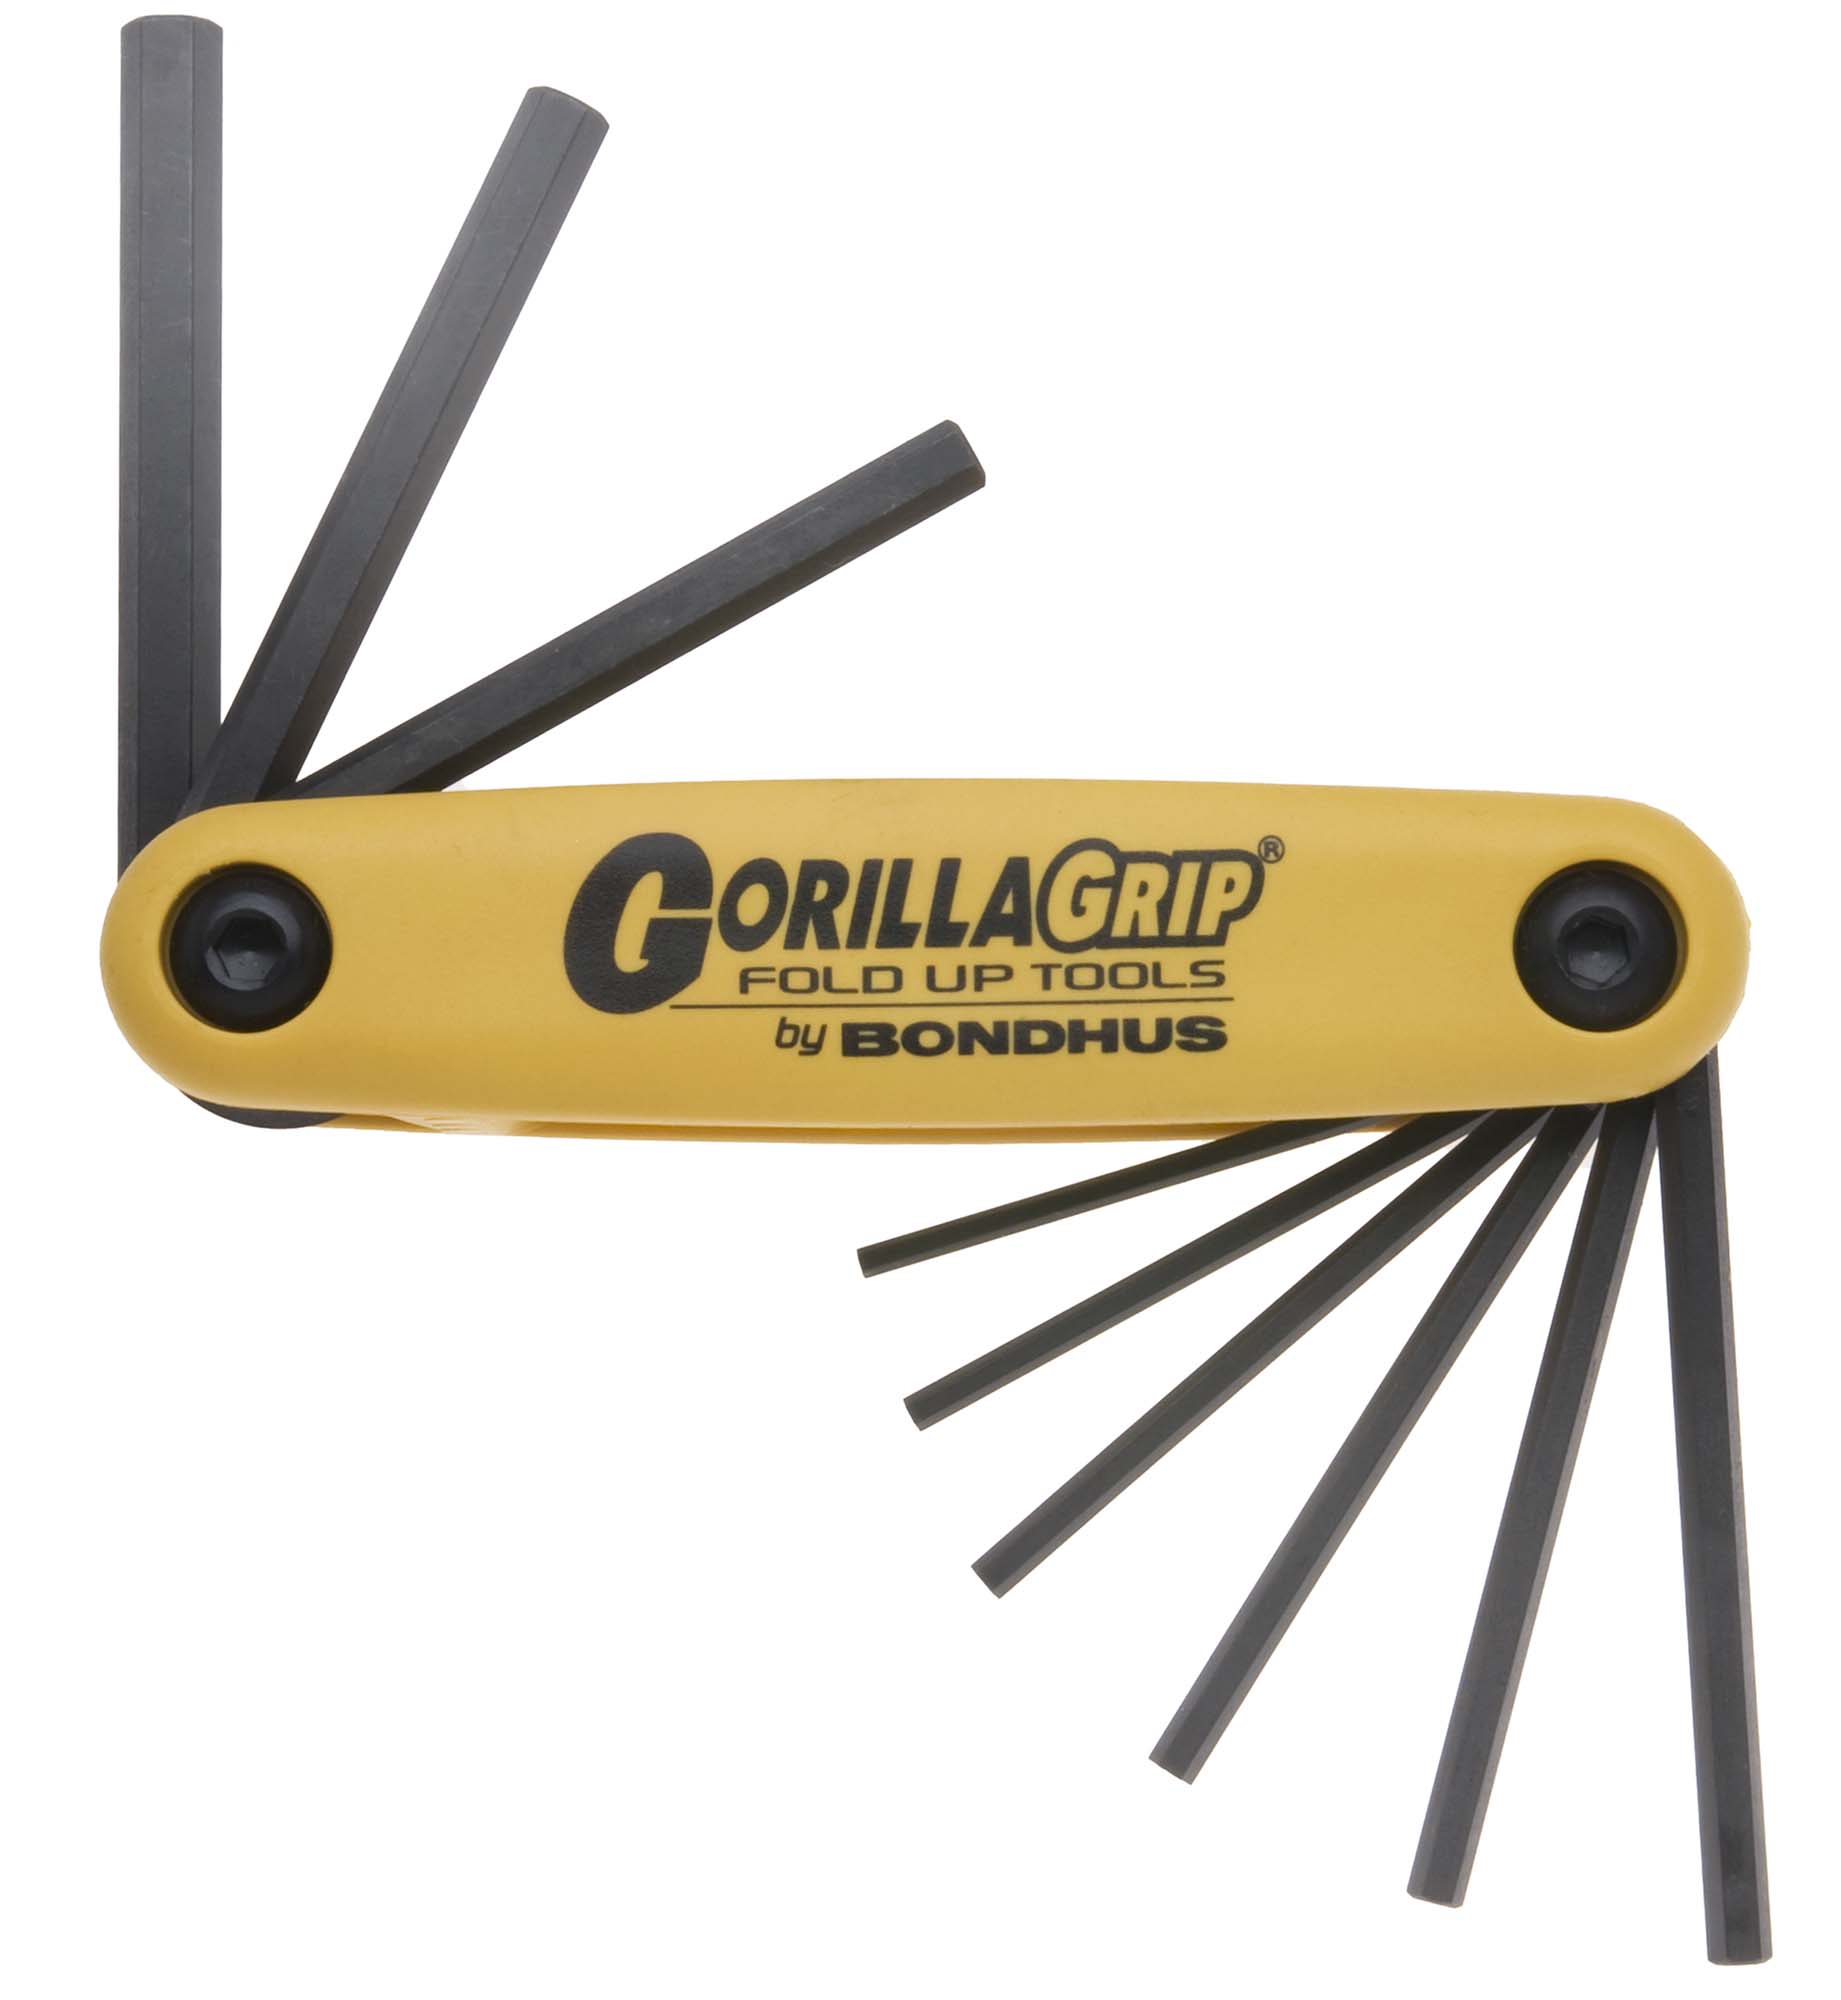 Bondhus 12589 5/64-1/4" Gorilla Grip Fold Up Hex Key Set